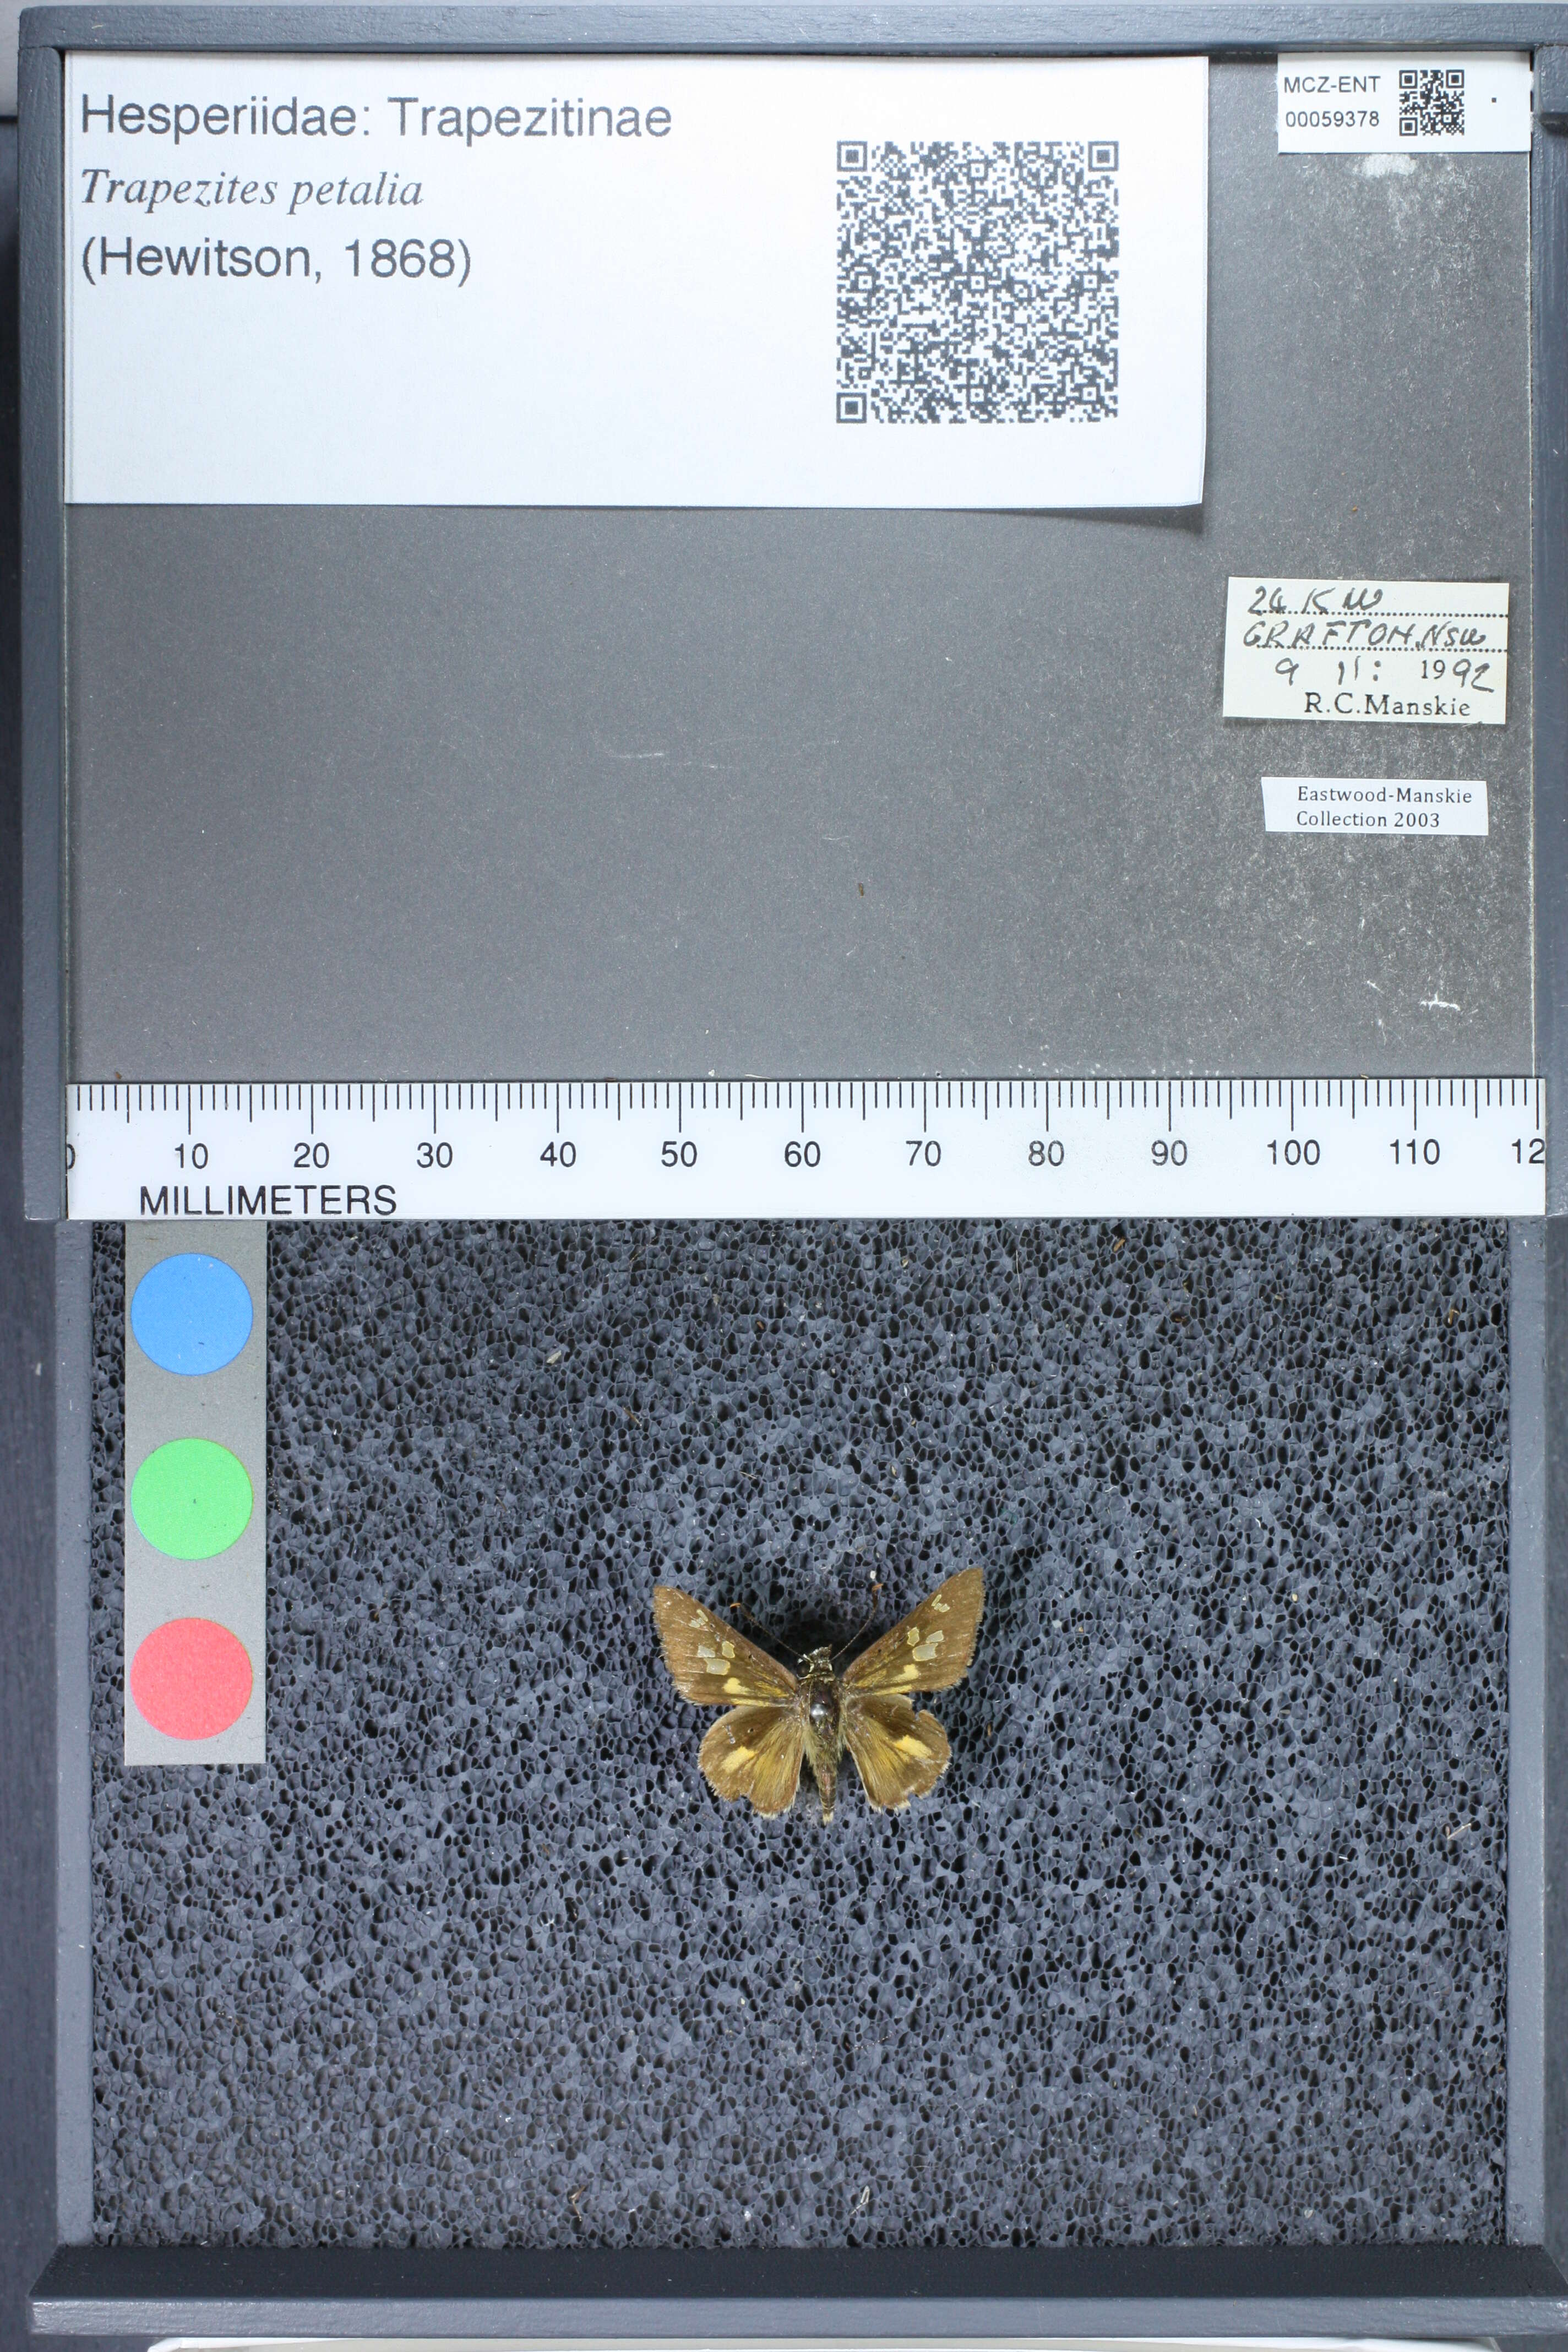 Image of Trapezites petalia Hewitson 1868